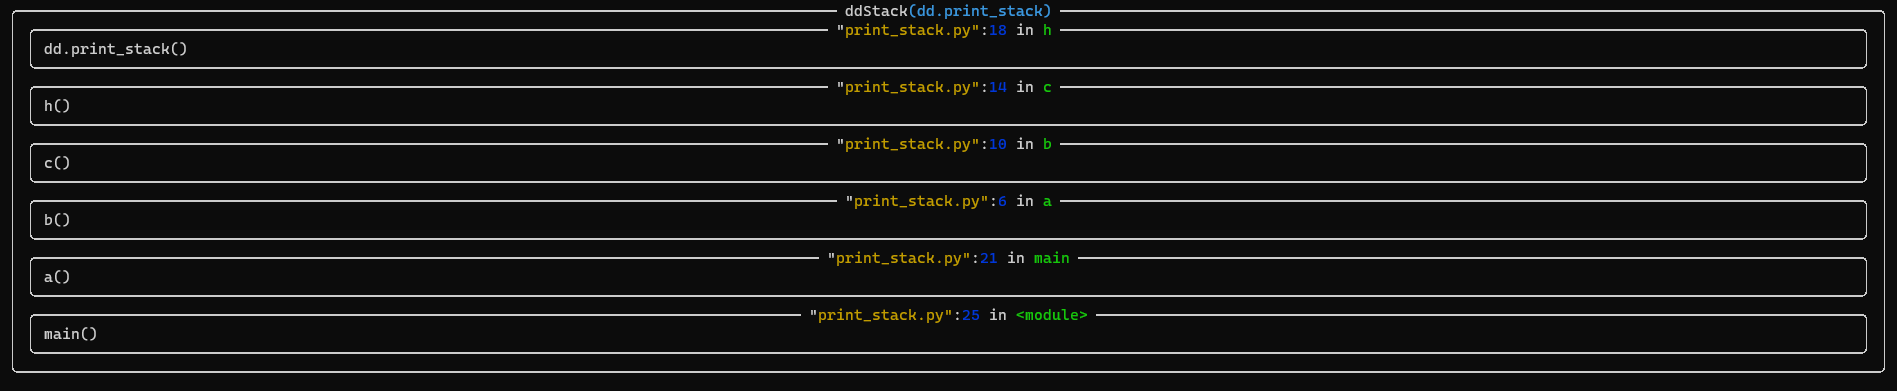 ddebug print_stack image